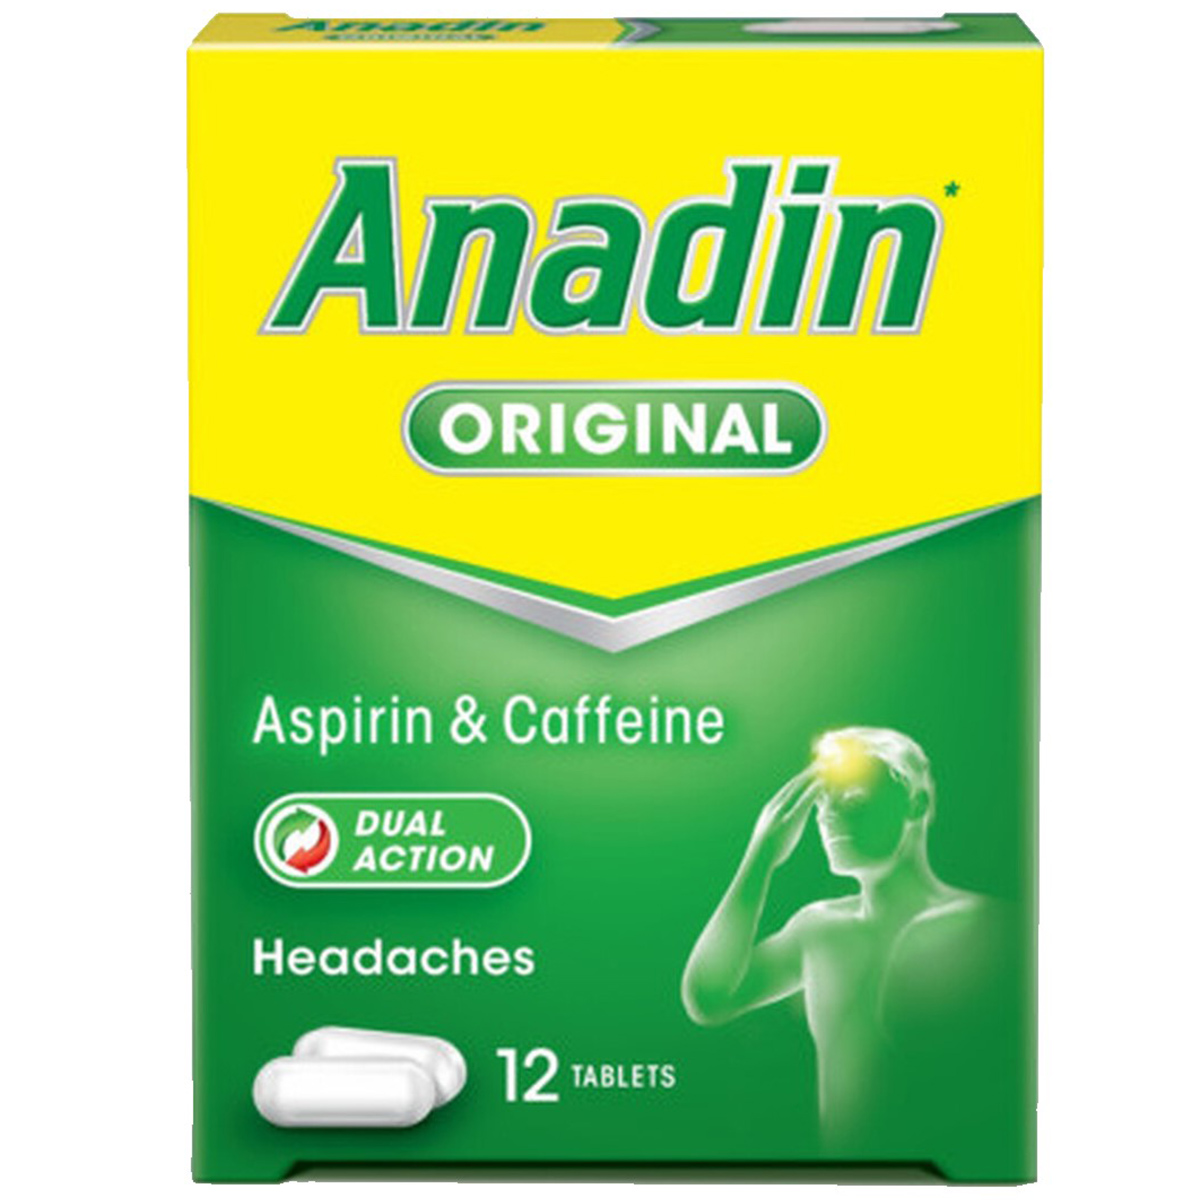 Anadin Original Dual Action Tablets 12 Pack Image